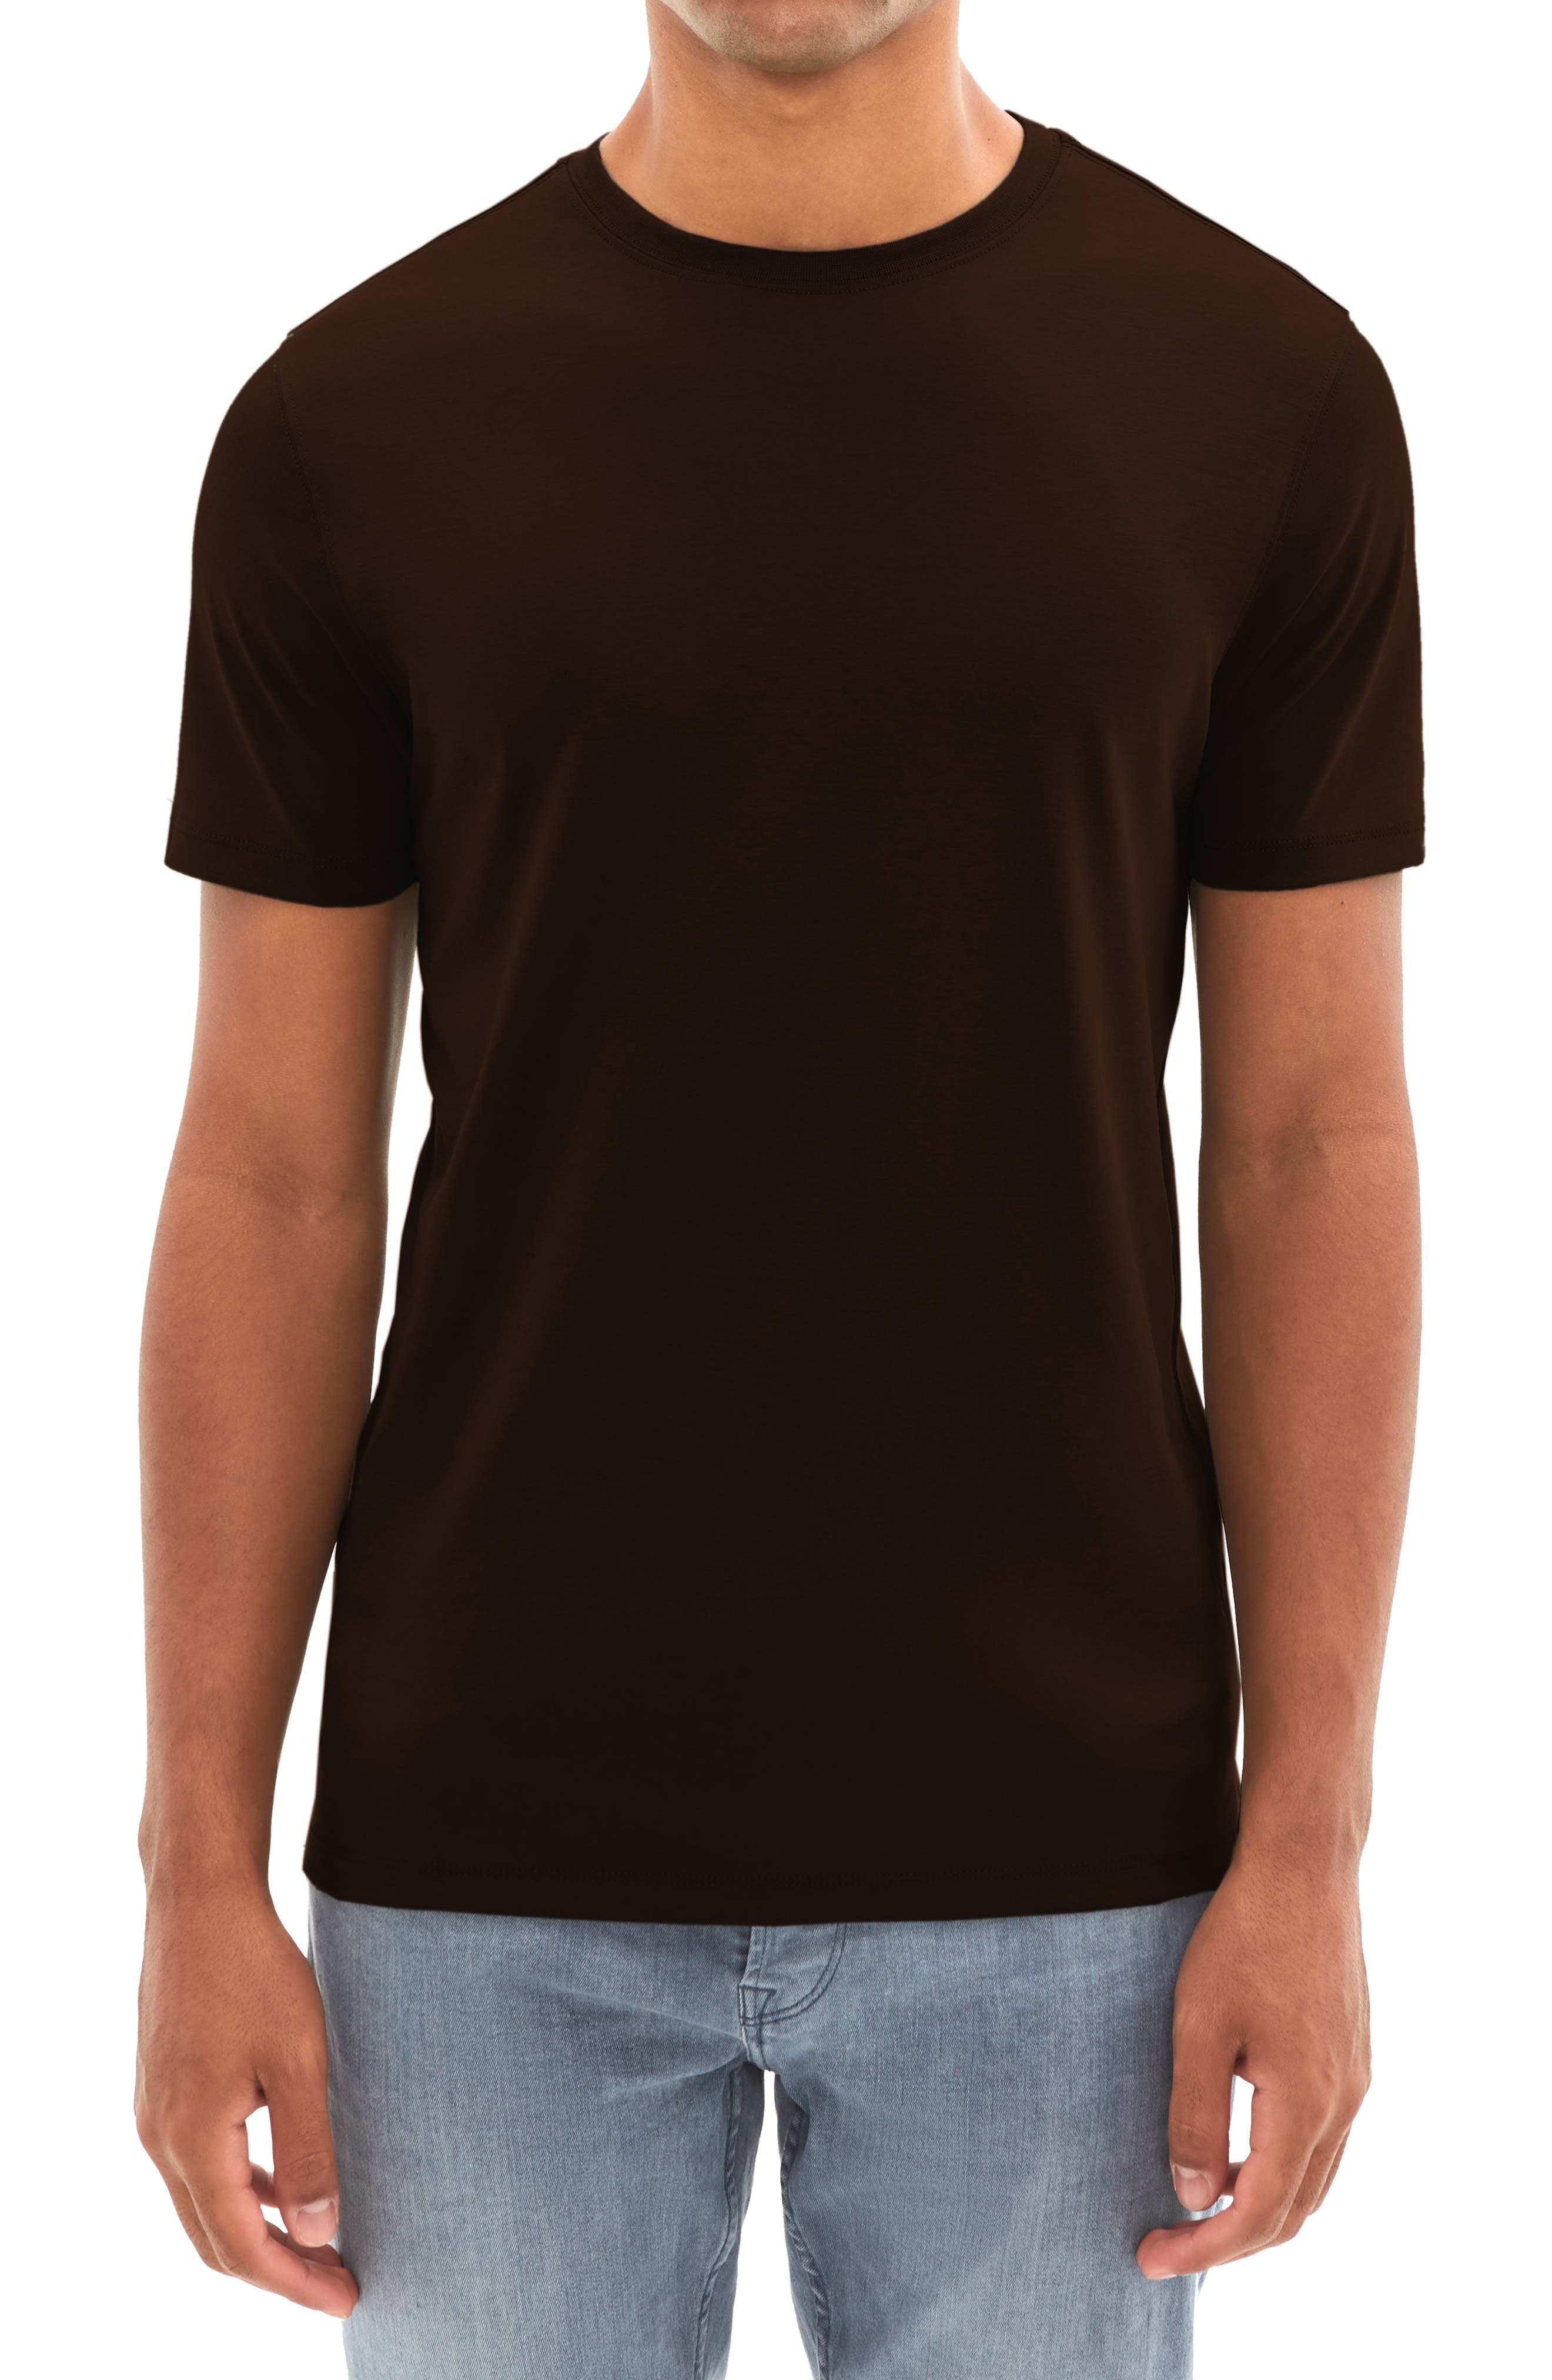 MEN FASHION Shirts & T-shirts Sports Kipsta T-shirt Black M discount 74% 